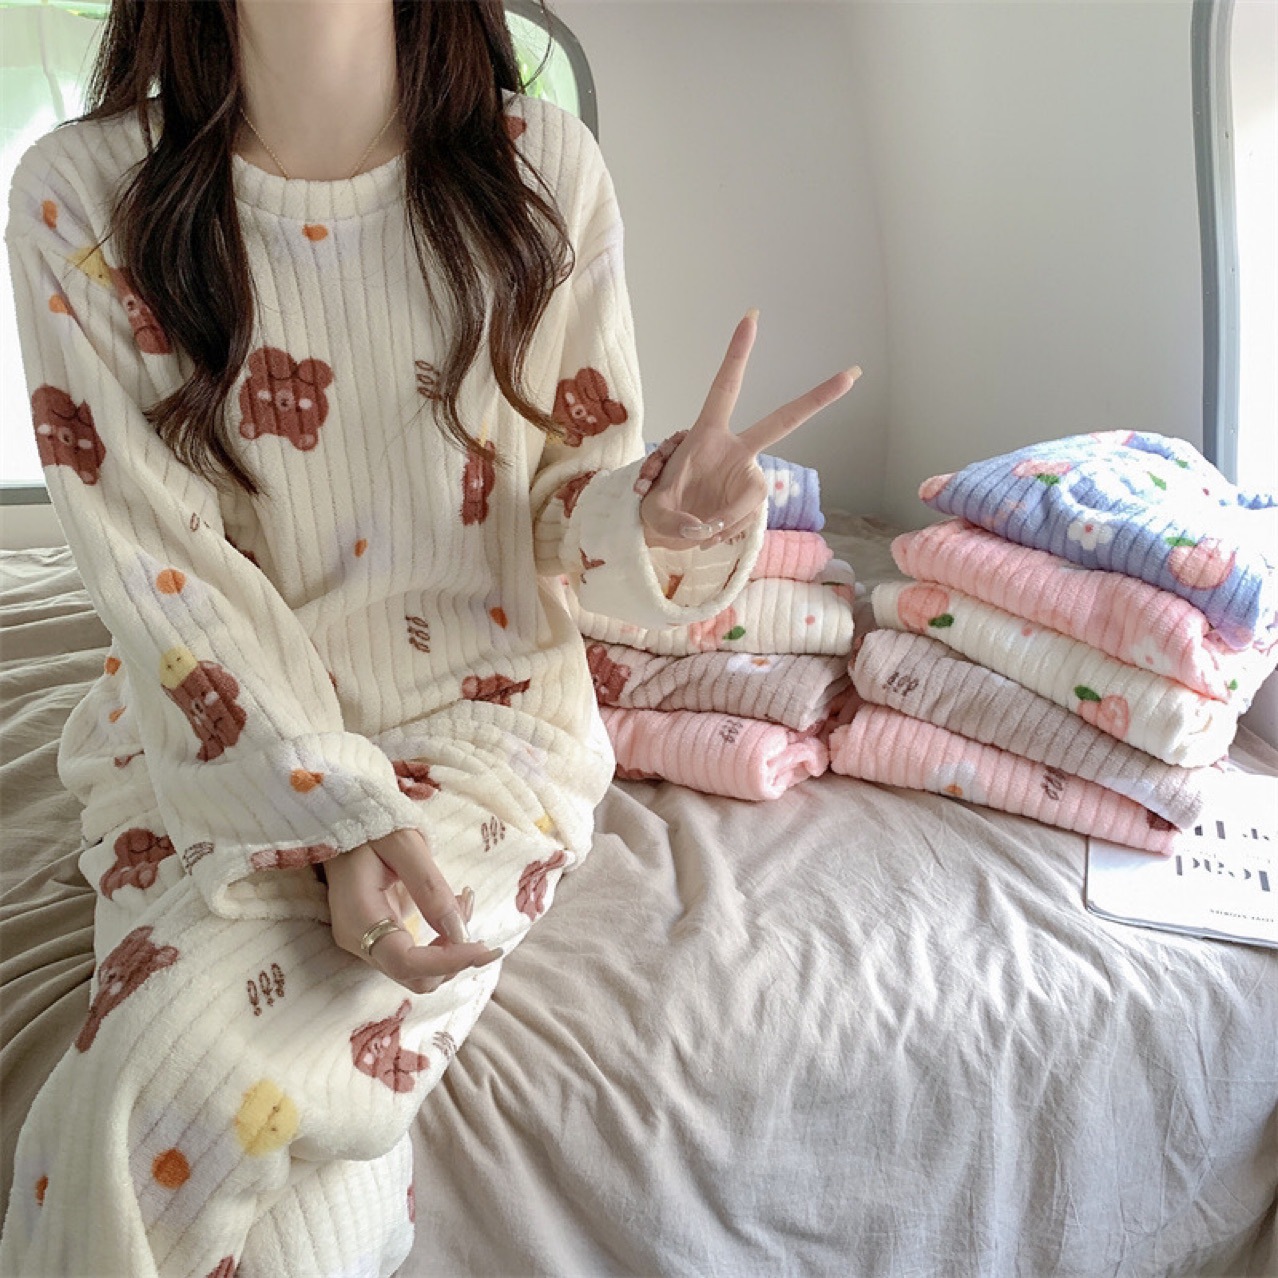 Women's Pajamas Autumn Winter Warm Pyjamas Sets Thick Coral Long